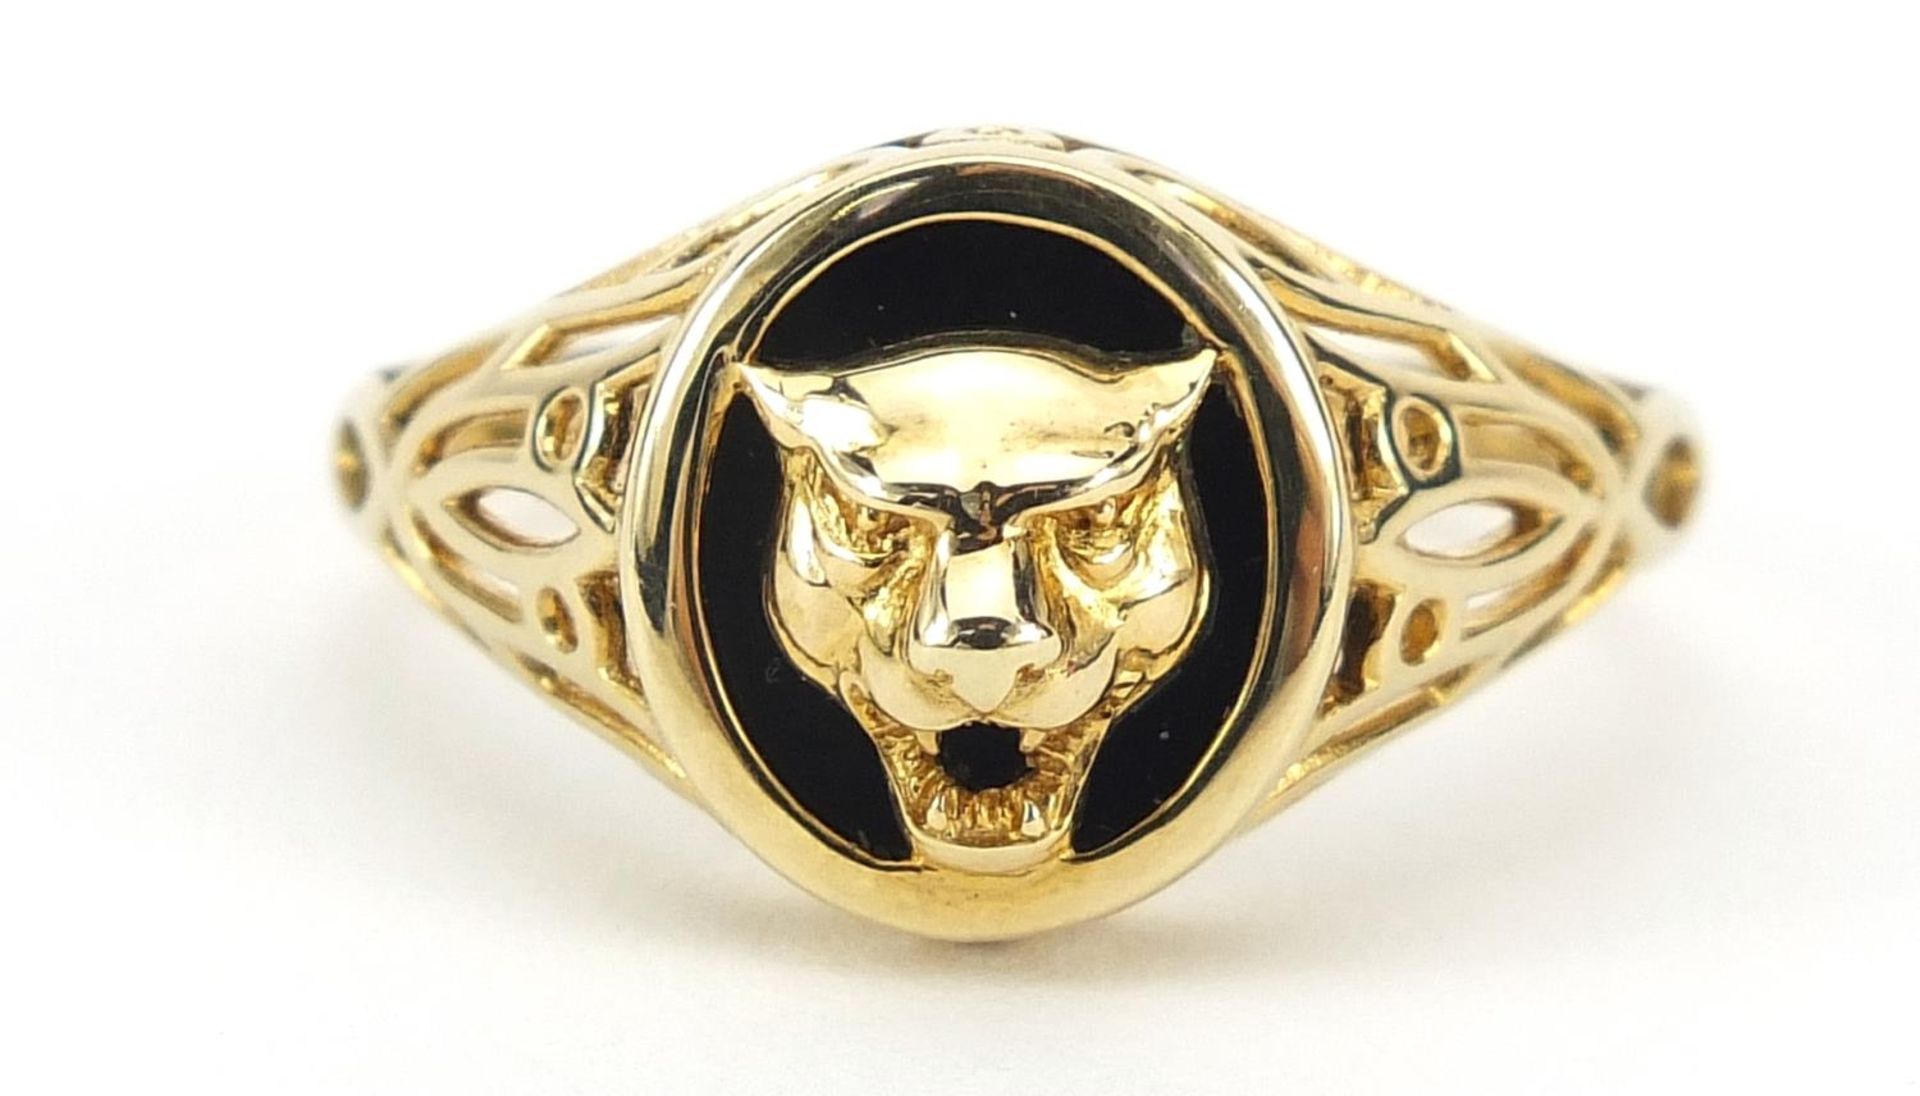 9ct gold and black onyx Jaguar car mascot ring, size V, 4.3g